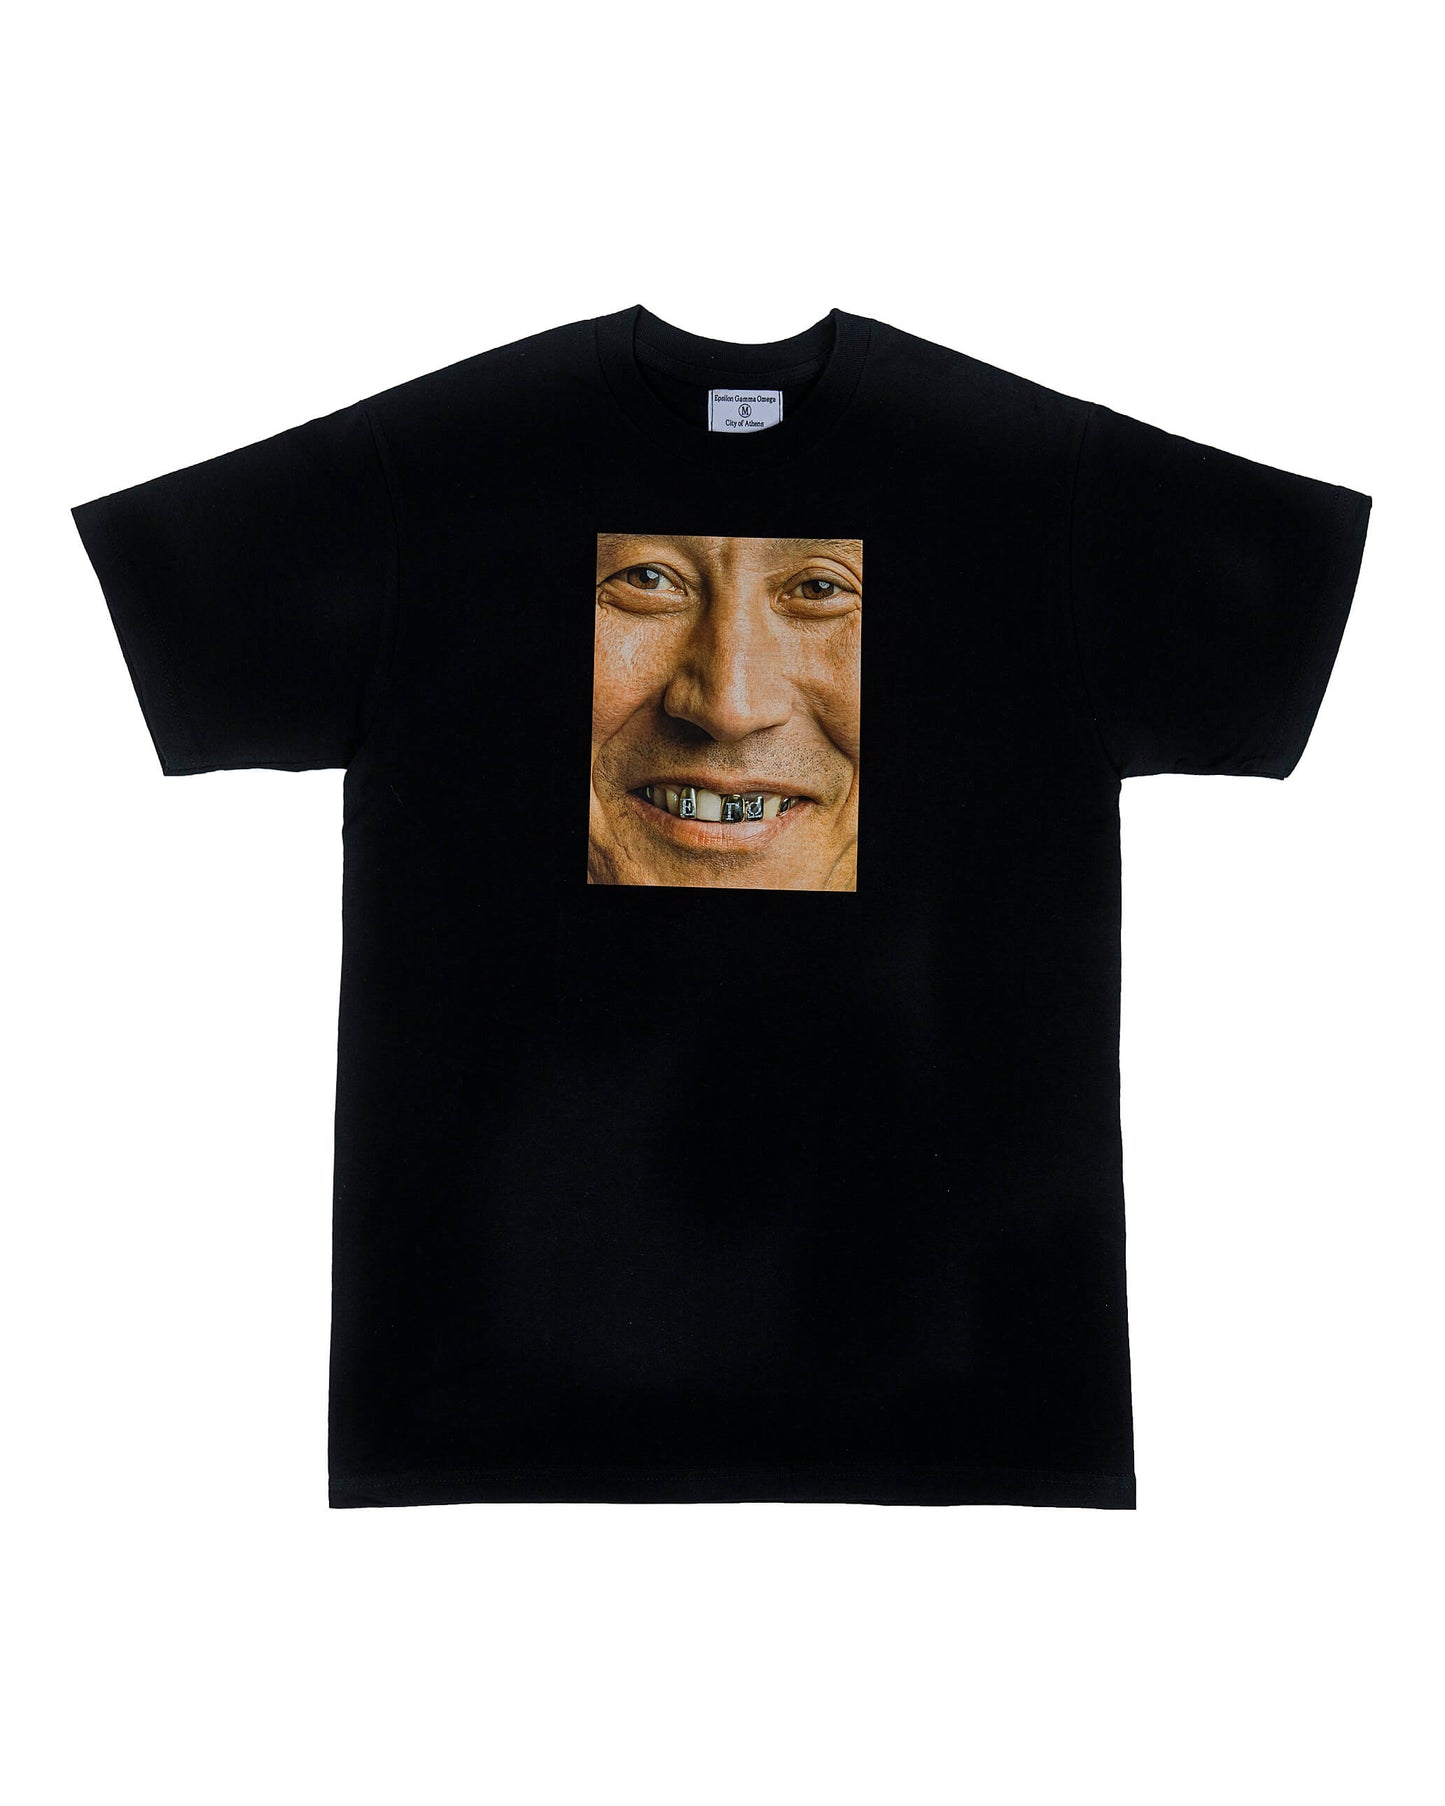 The man t-shirt